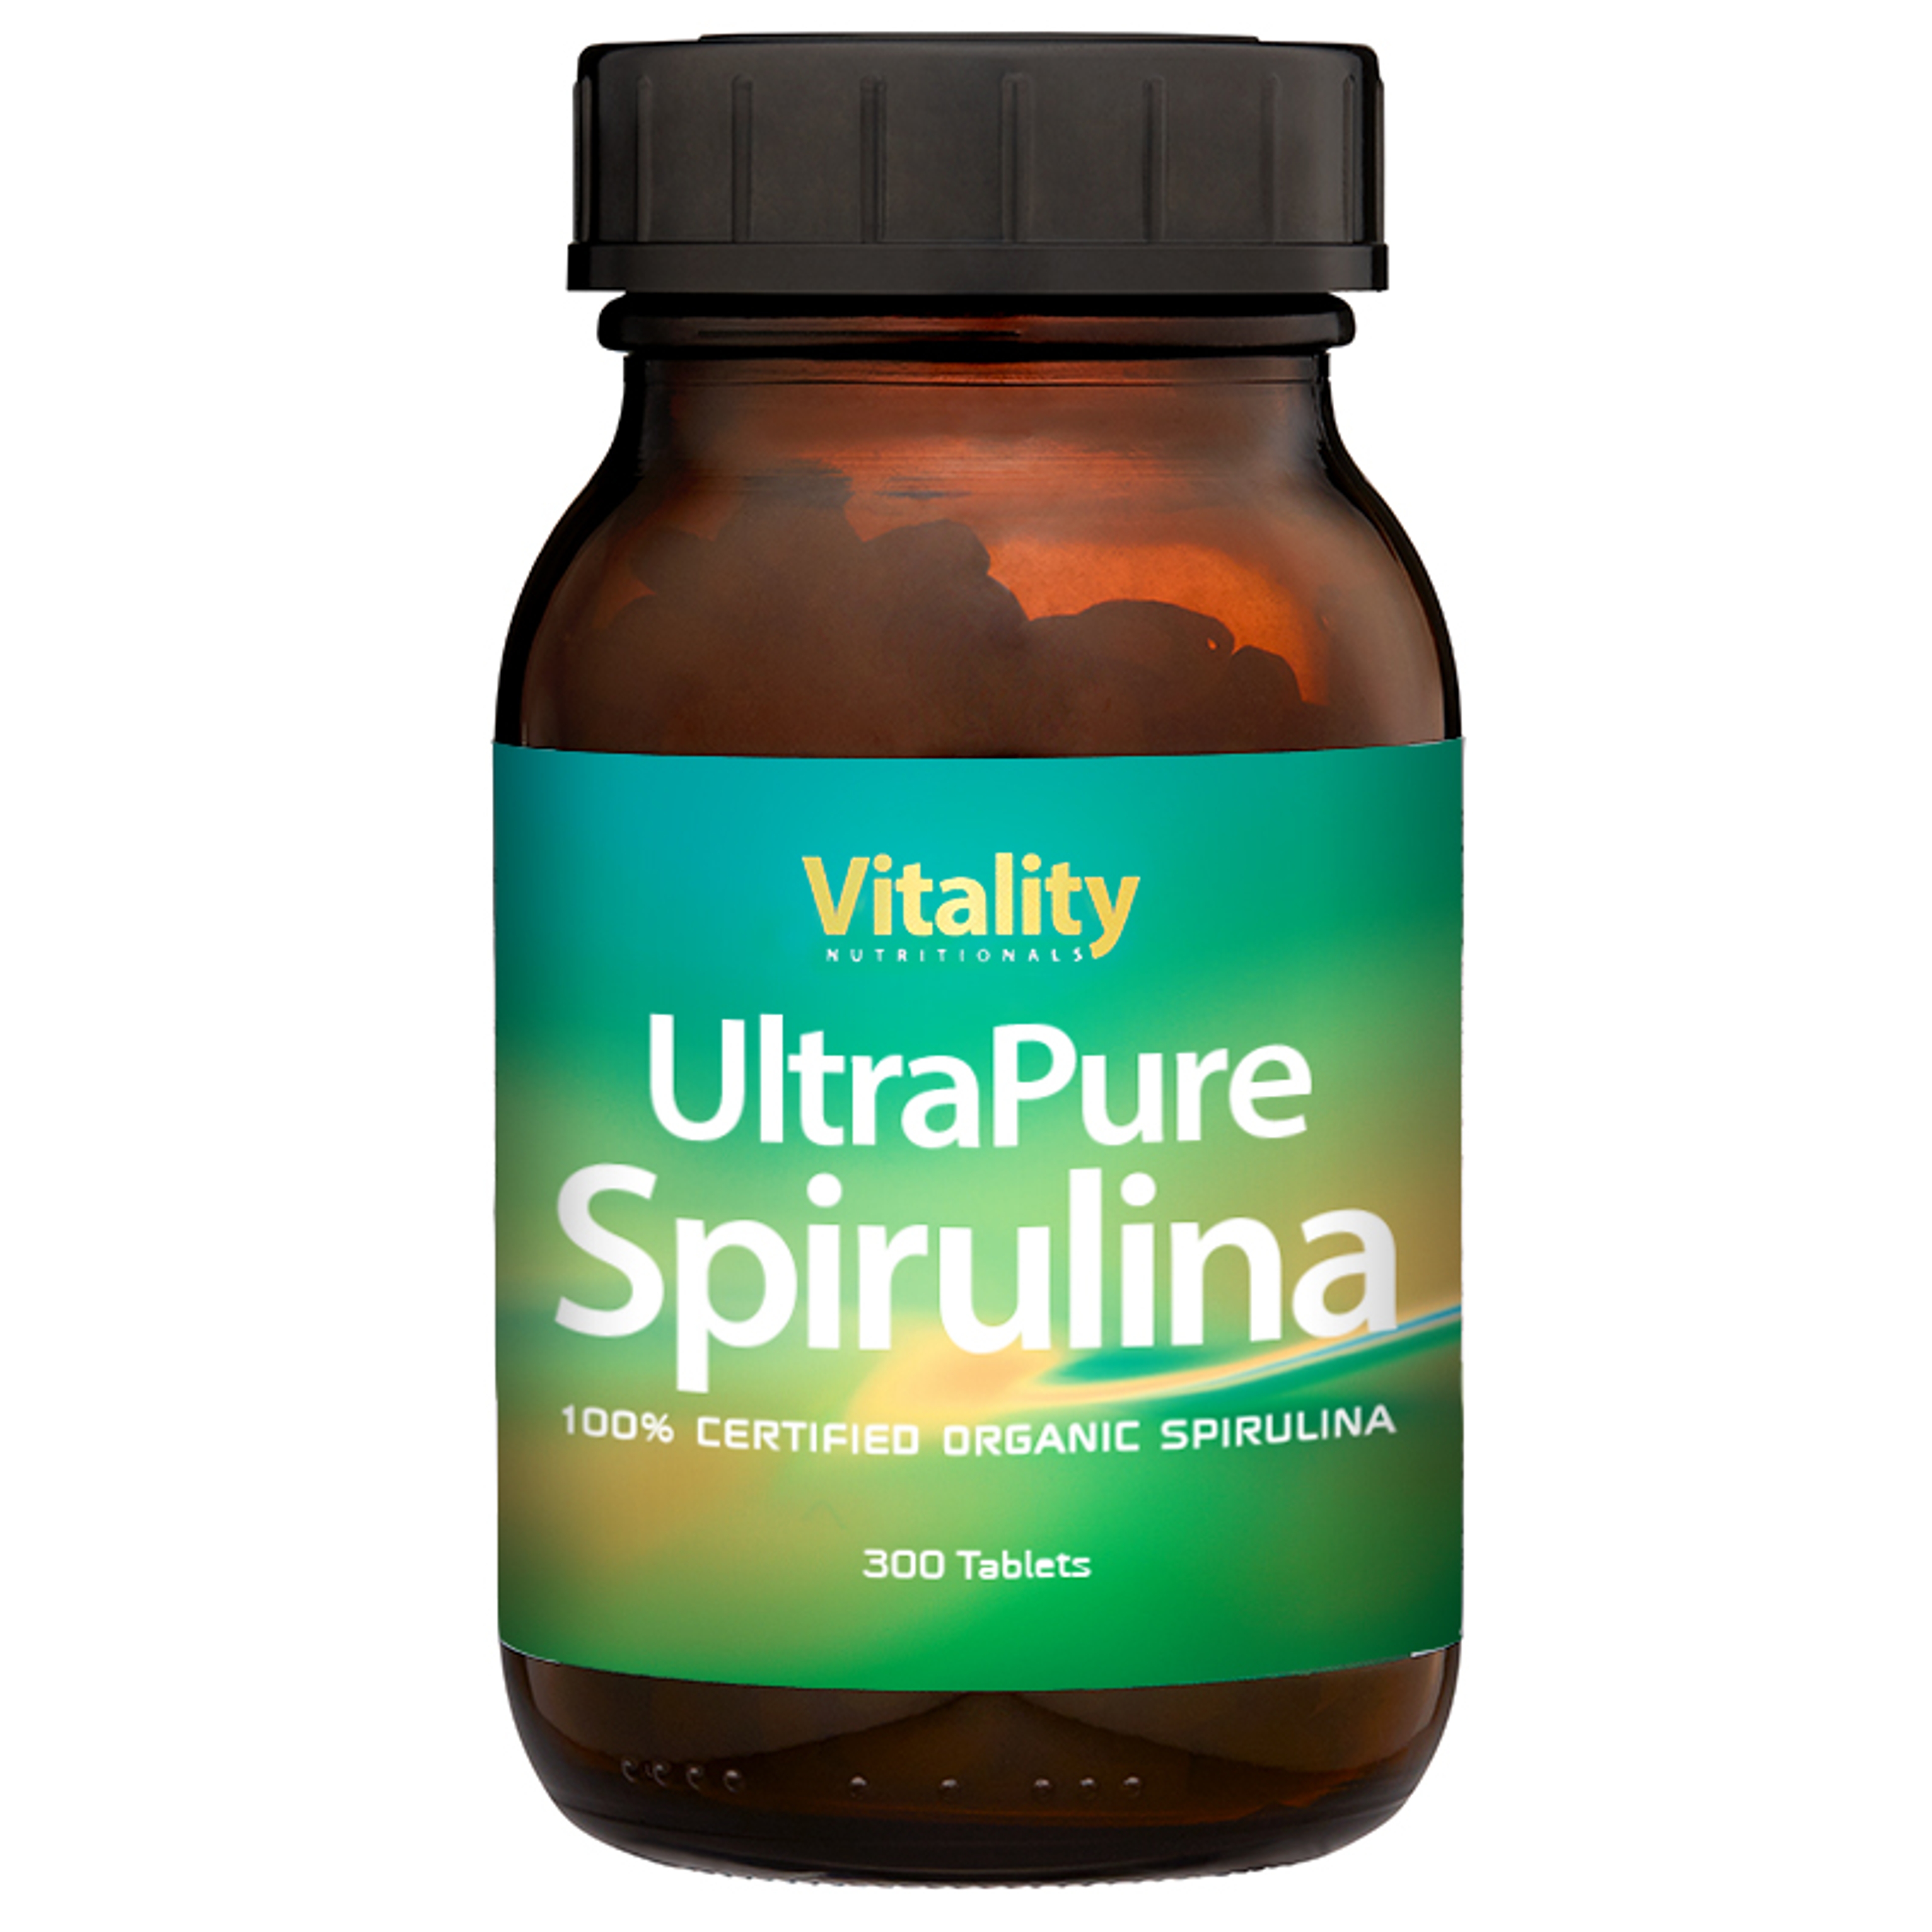 Vitality-Nutritionals-UltraPure-Spirulina.jpg